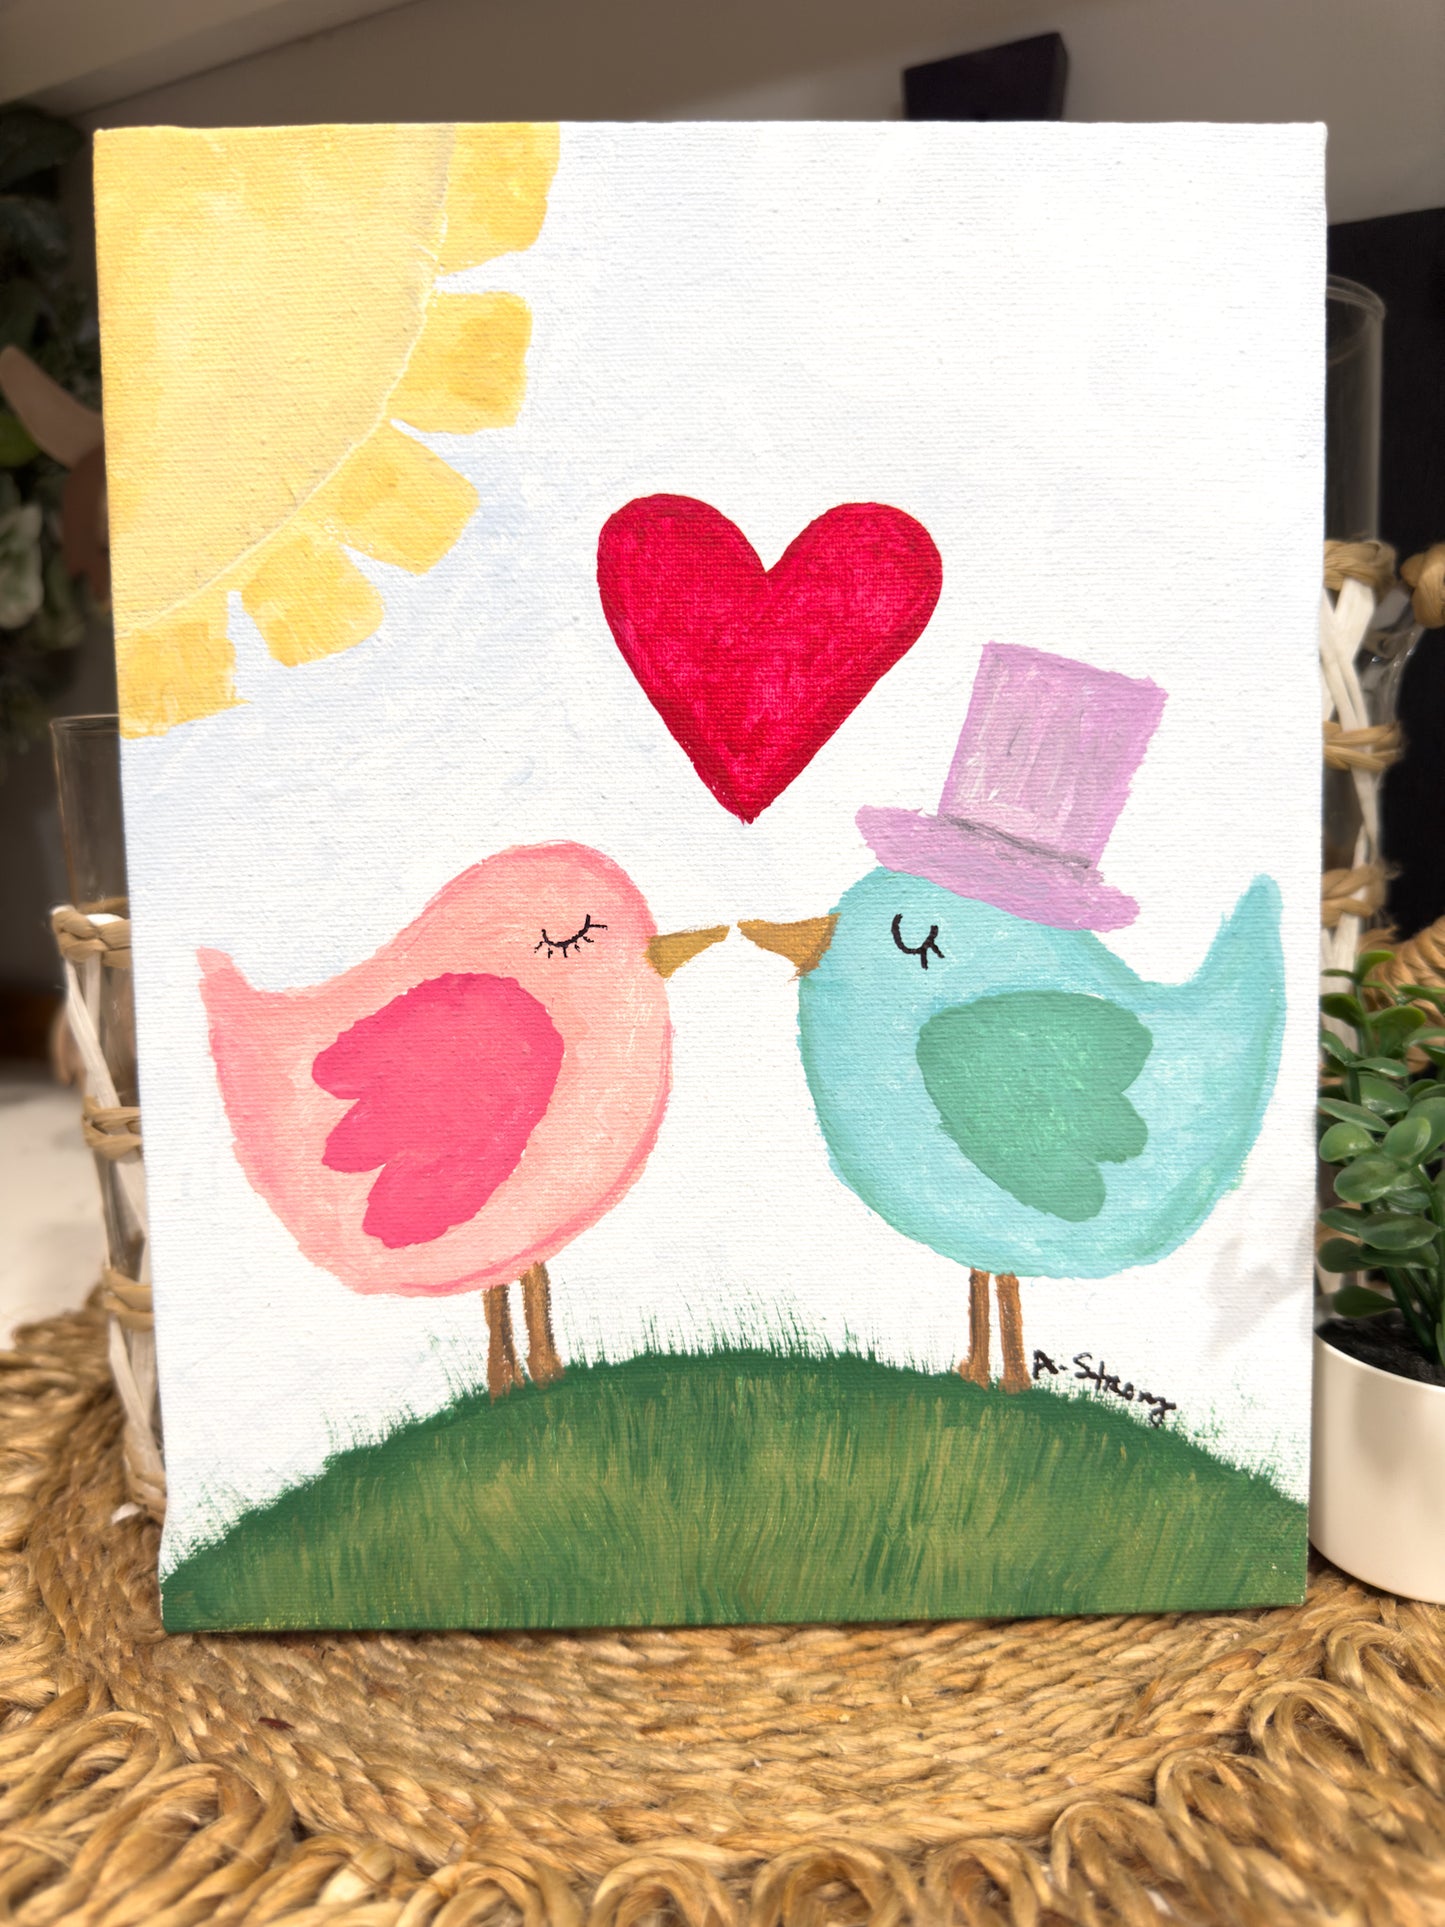 Free Love Bird Couple Paint Class Workshop